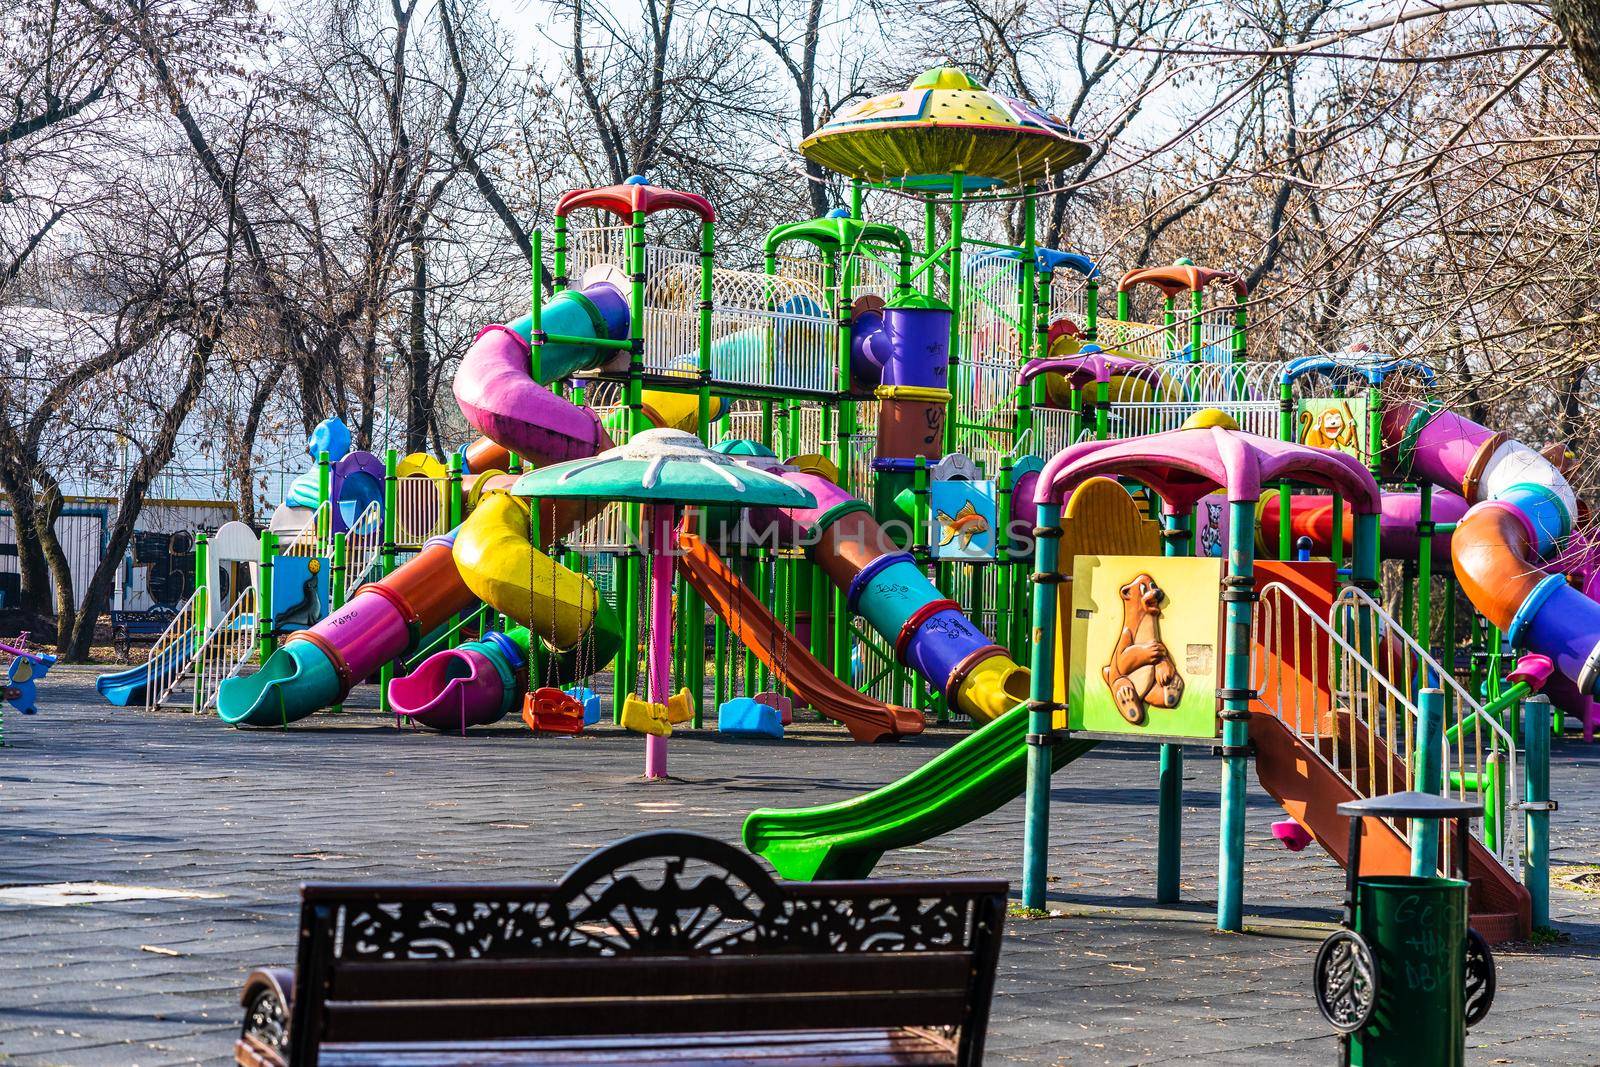 Outdoor colorful playground fun for children in Bucharest, Romania, 2021 by vladispas